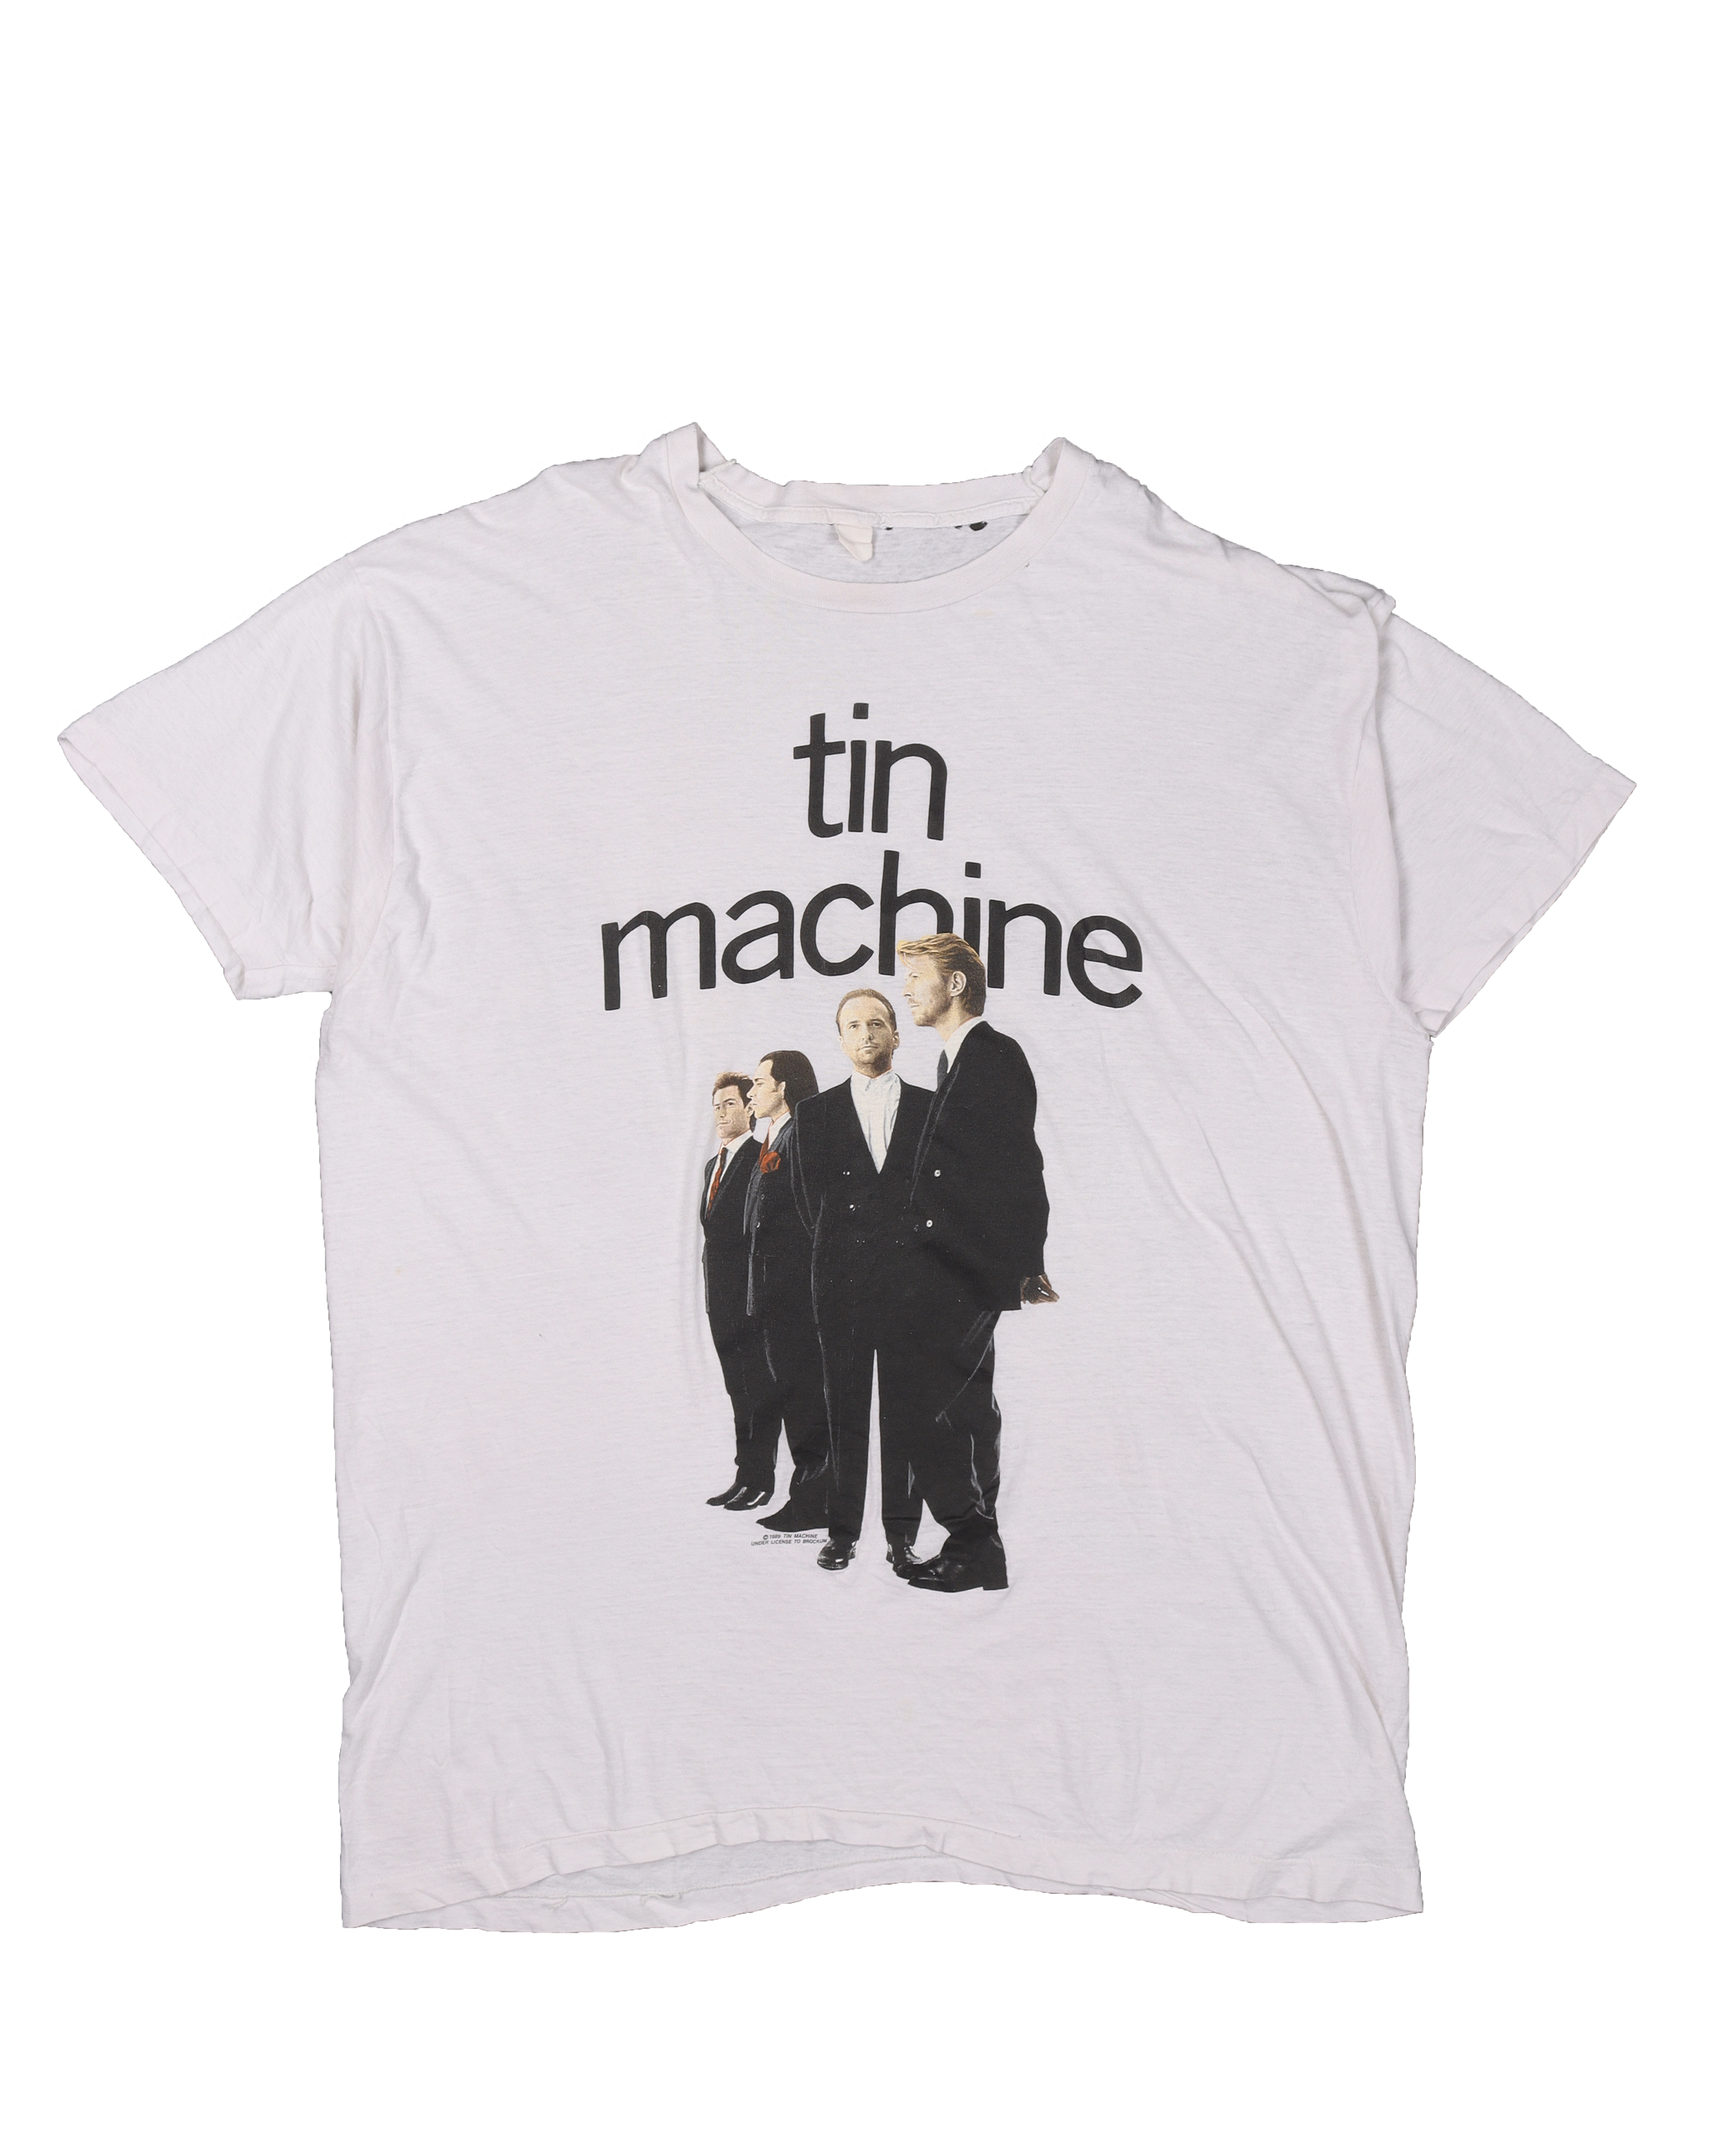 Tin Machine Tour David Bowie T-Shirt